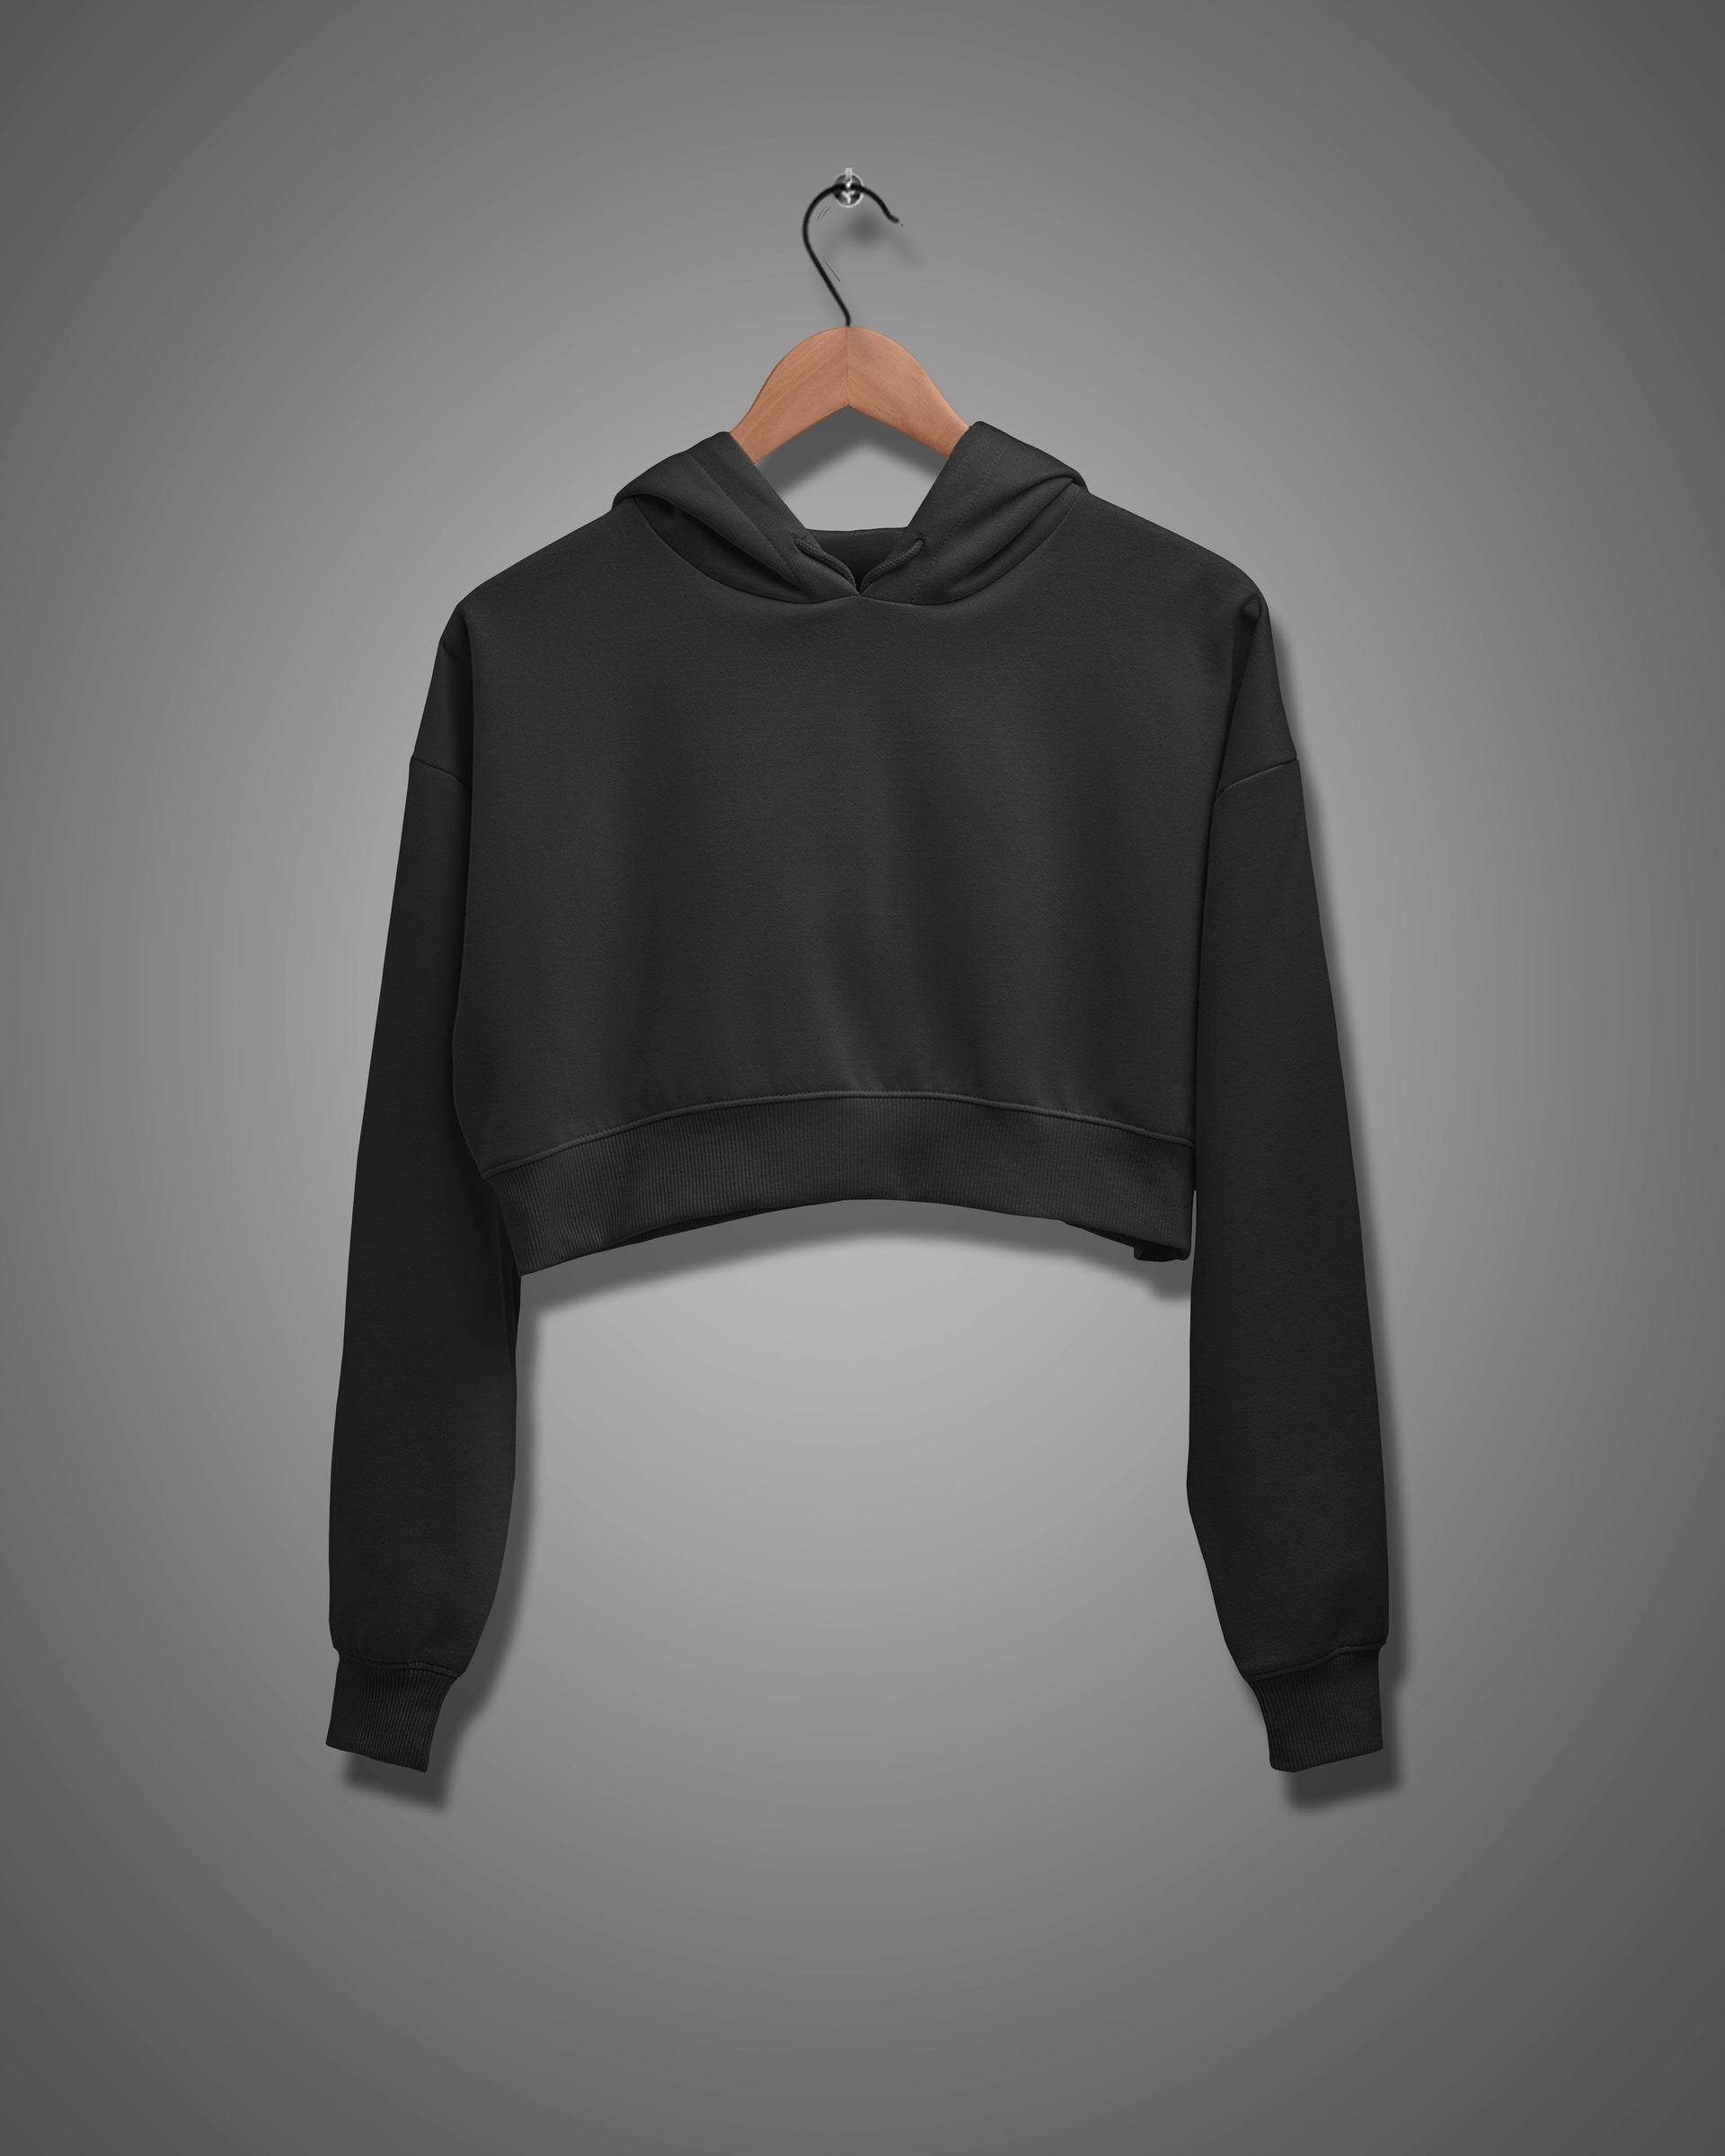 Classic black plain crop hoodie for women